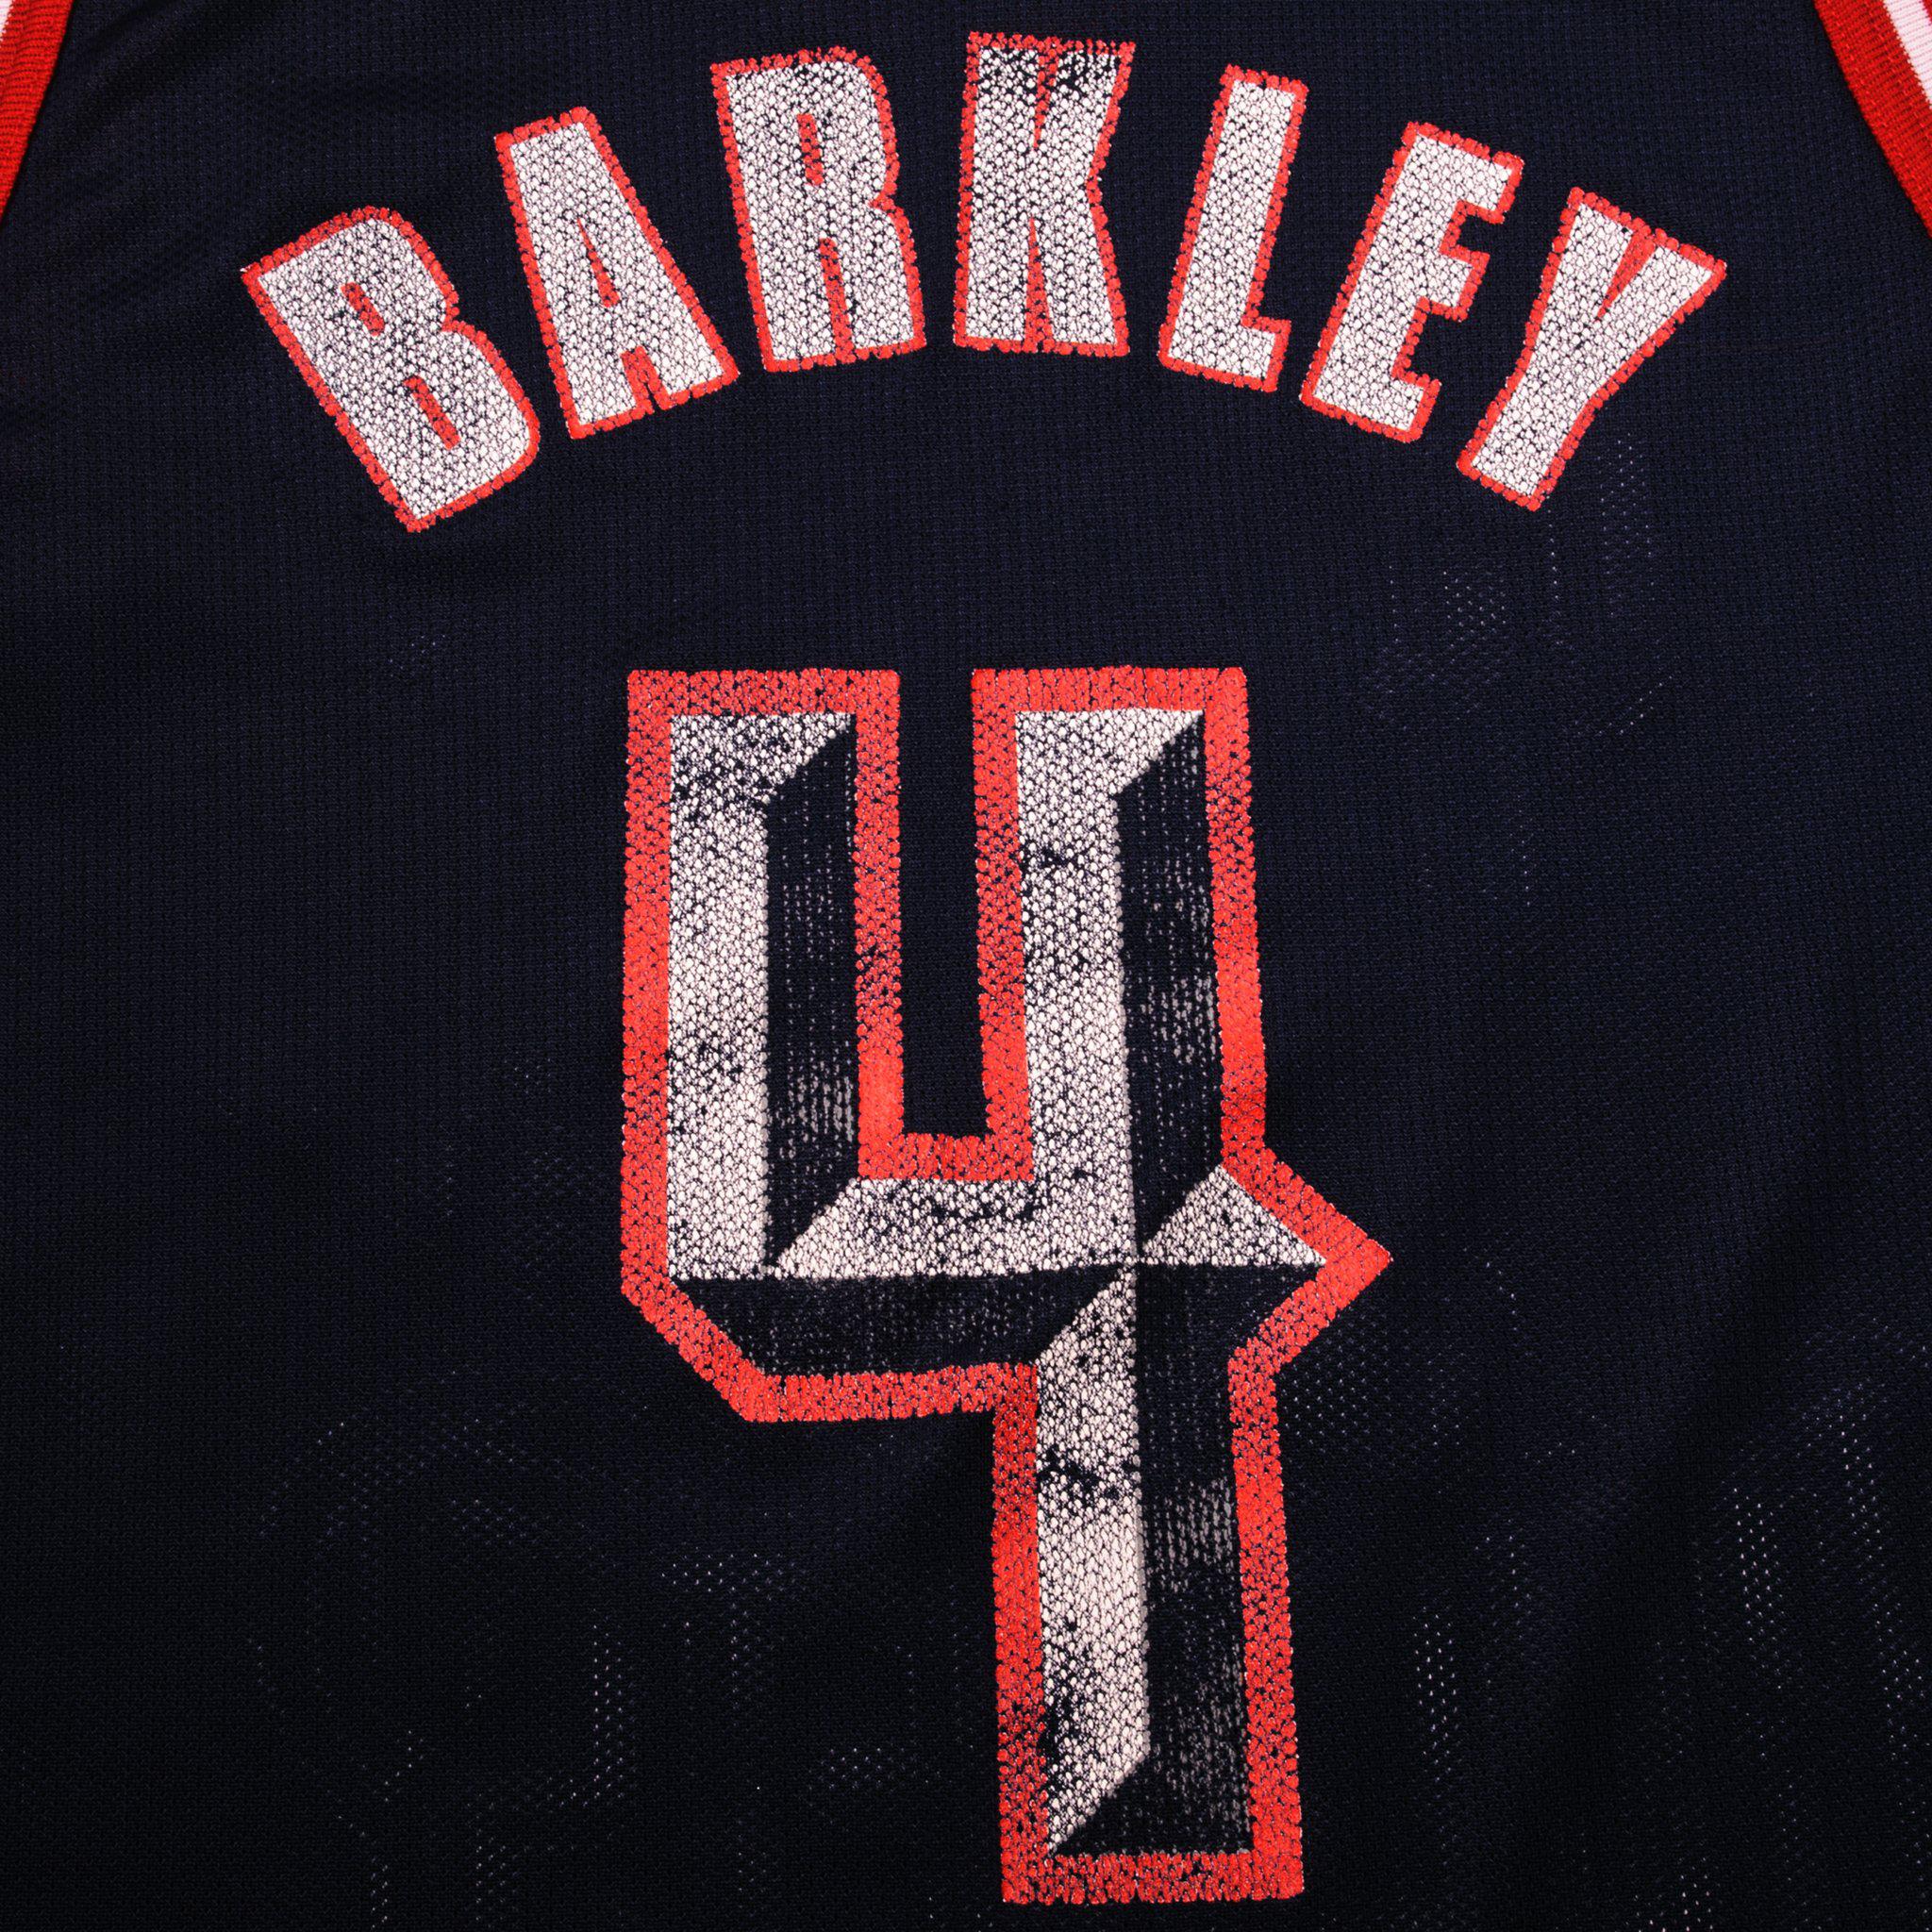 Charles Barkley Vintage Houston Rockets Starter Jersey Size 52 In